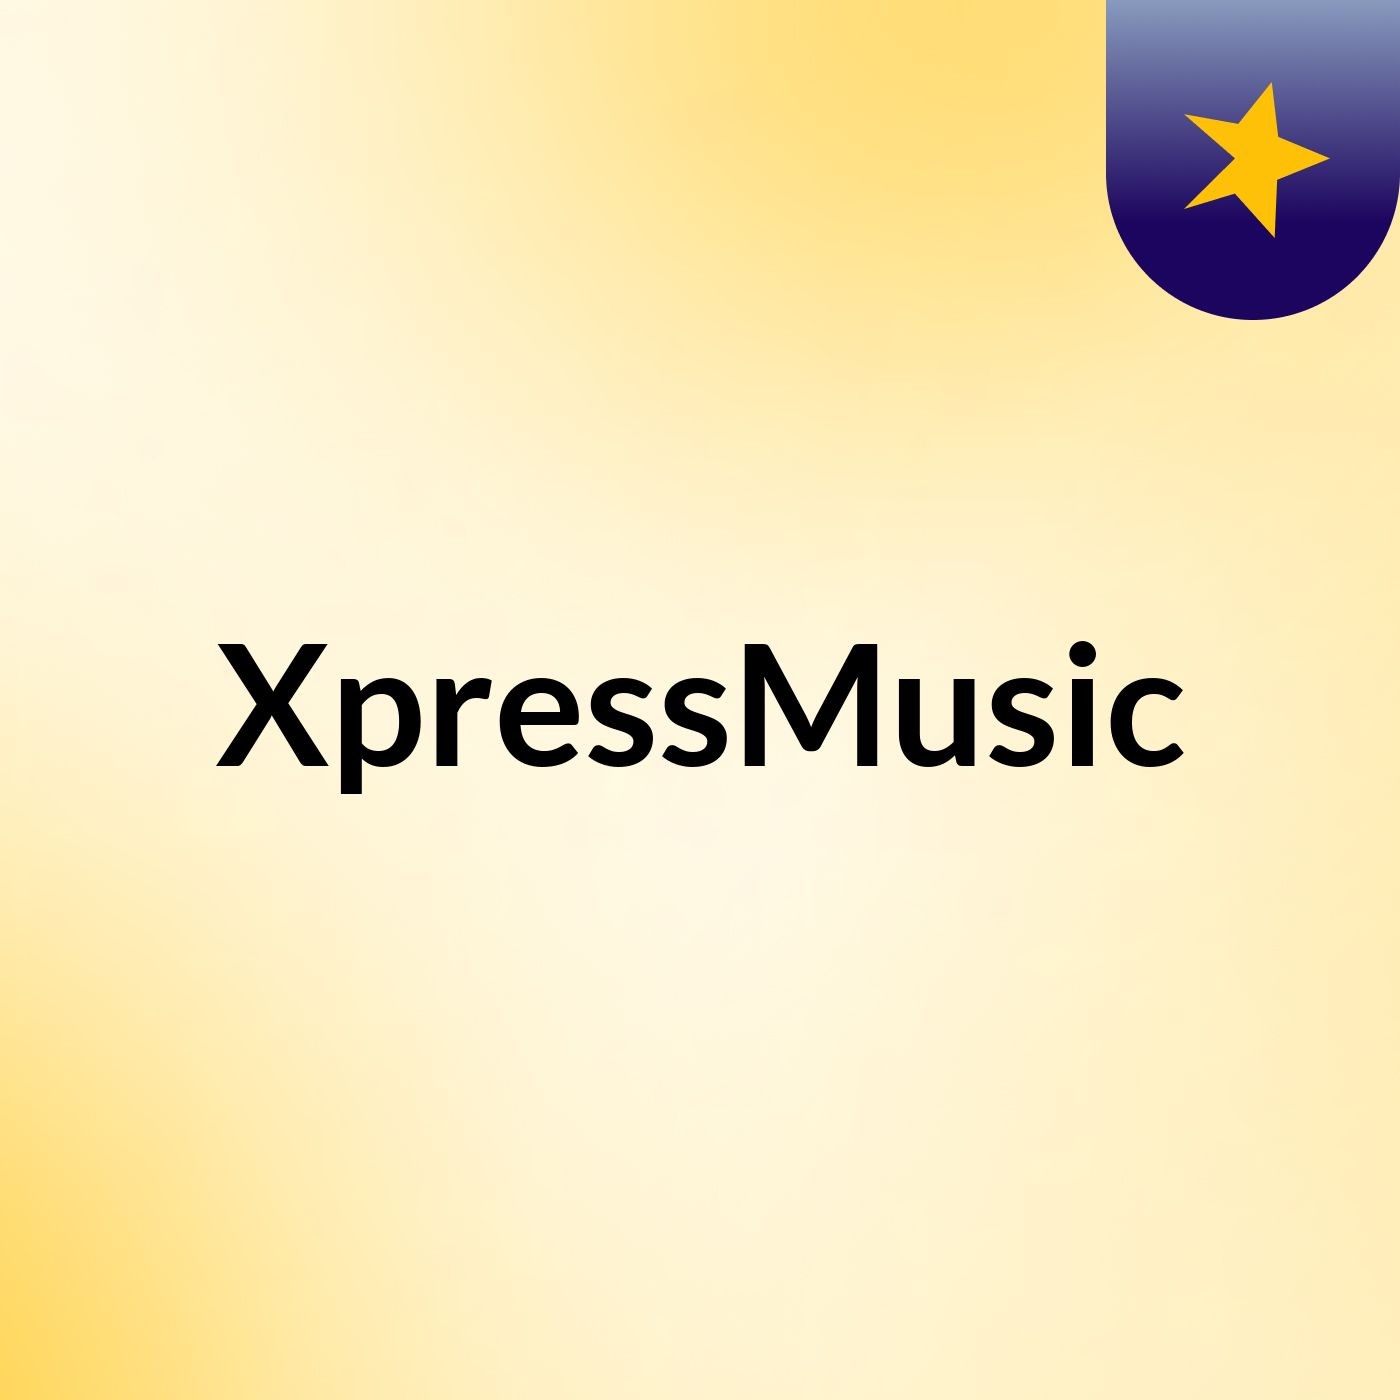 XpressMusic